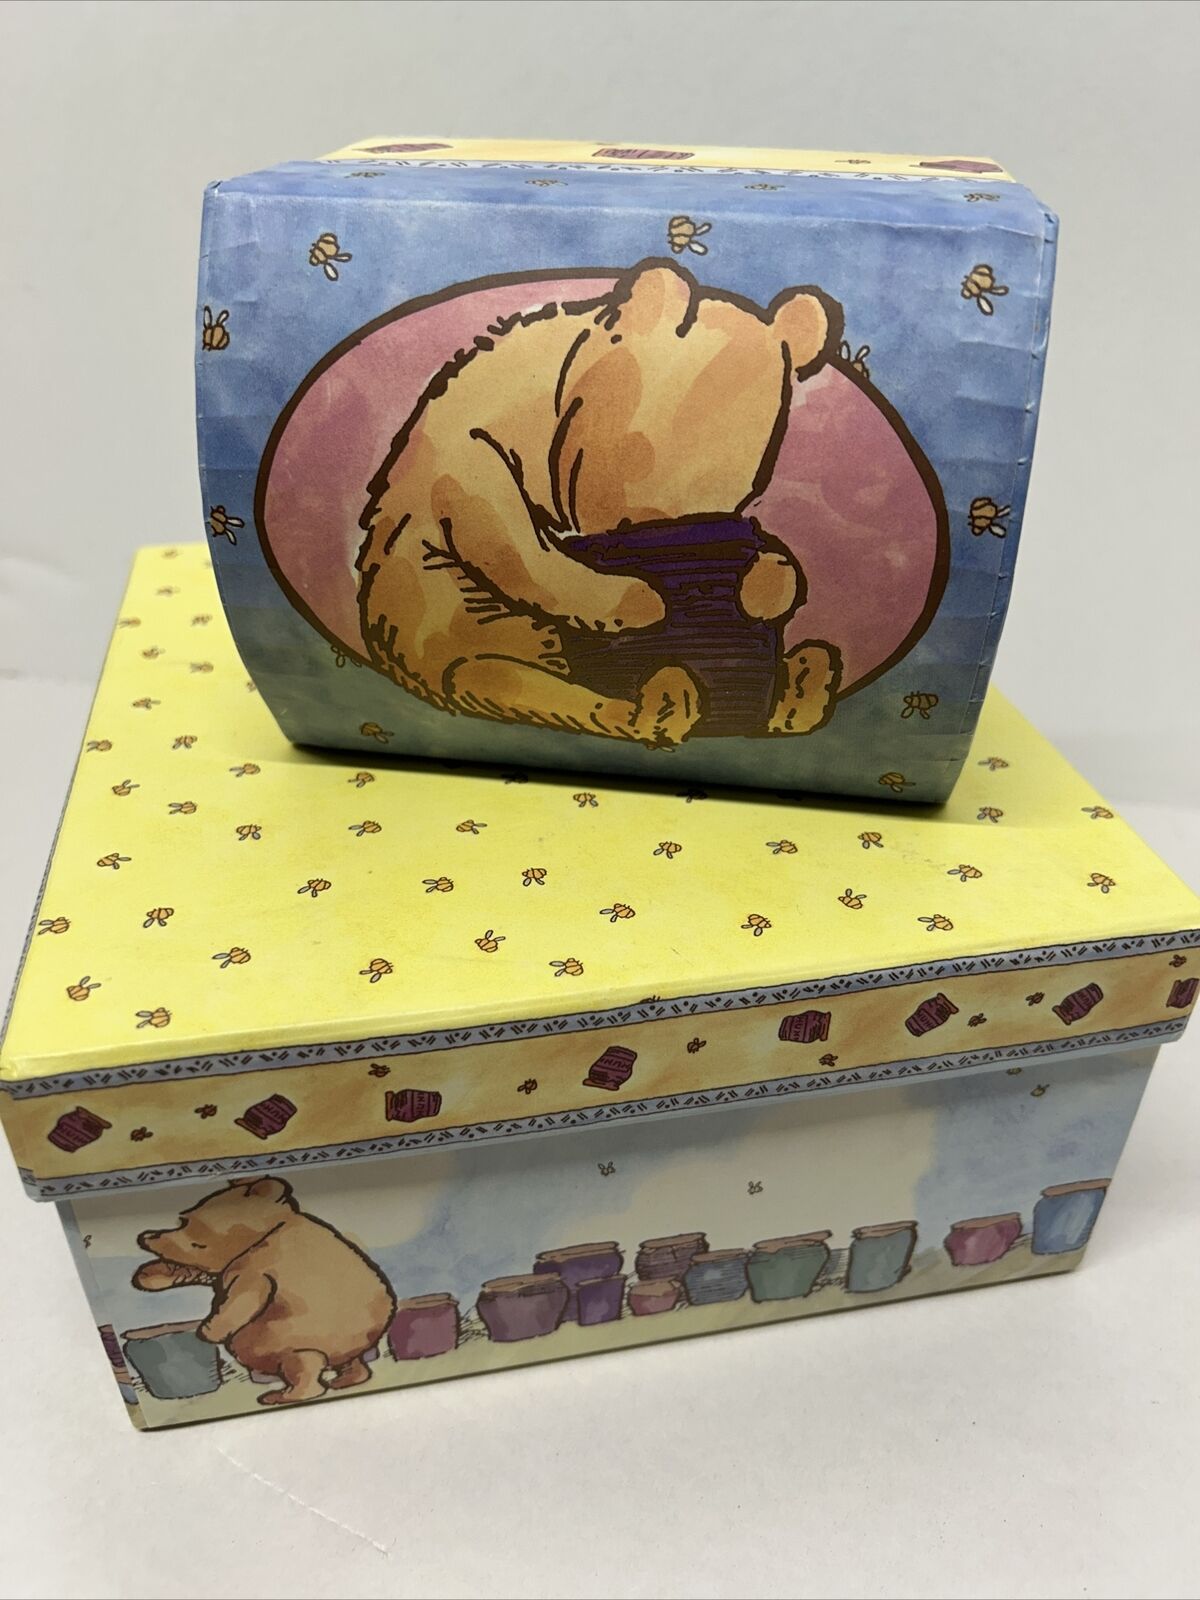 VTG Disney Winnie The Pooh Jewelry Box Trinket Storage  2 Boxes Classic Pooh